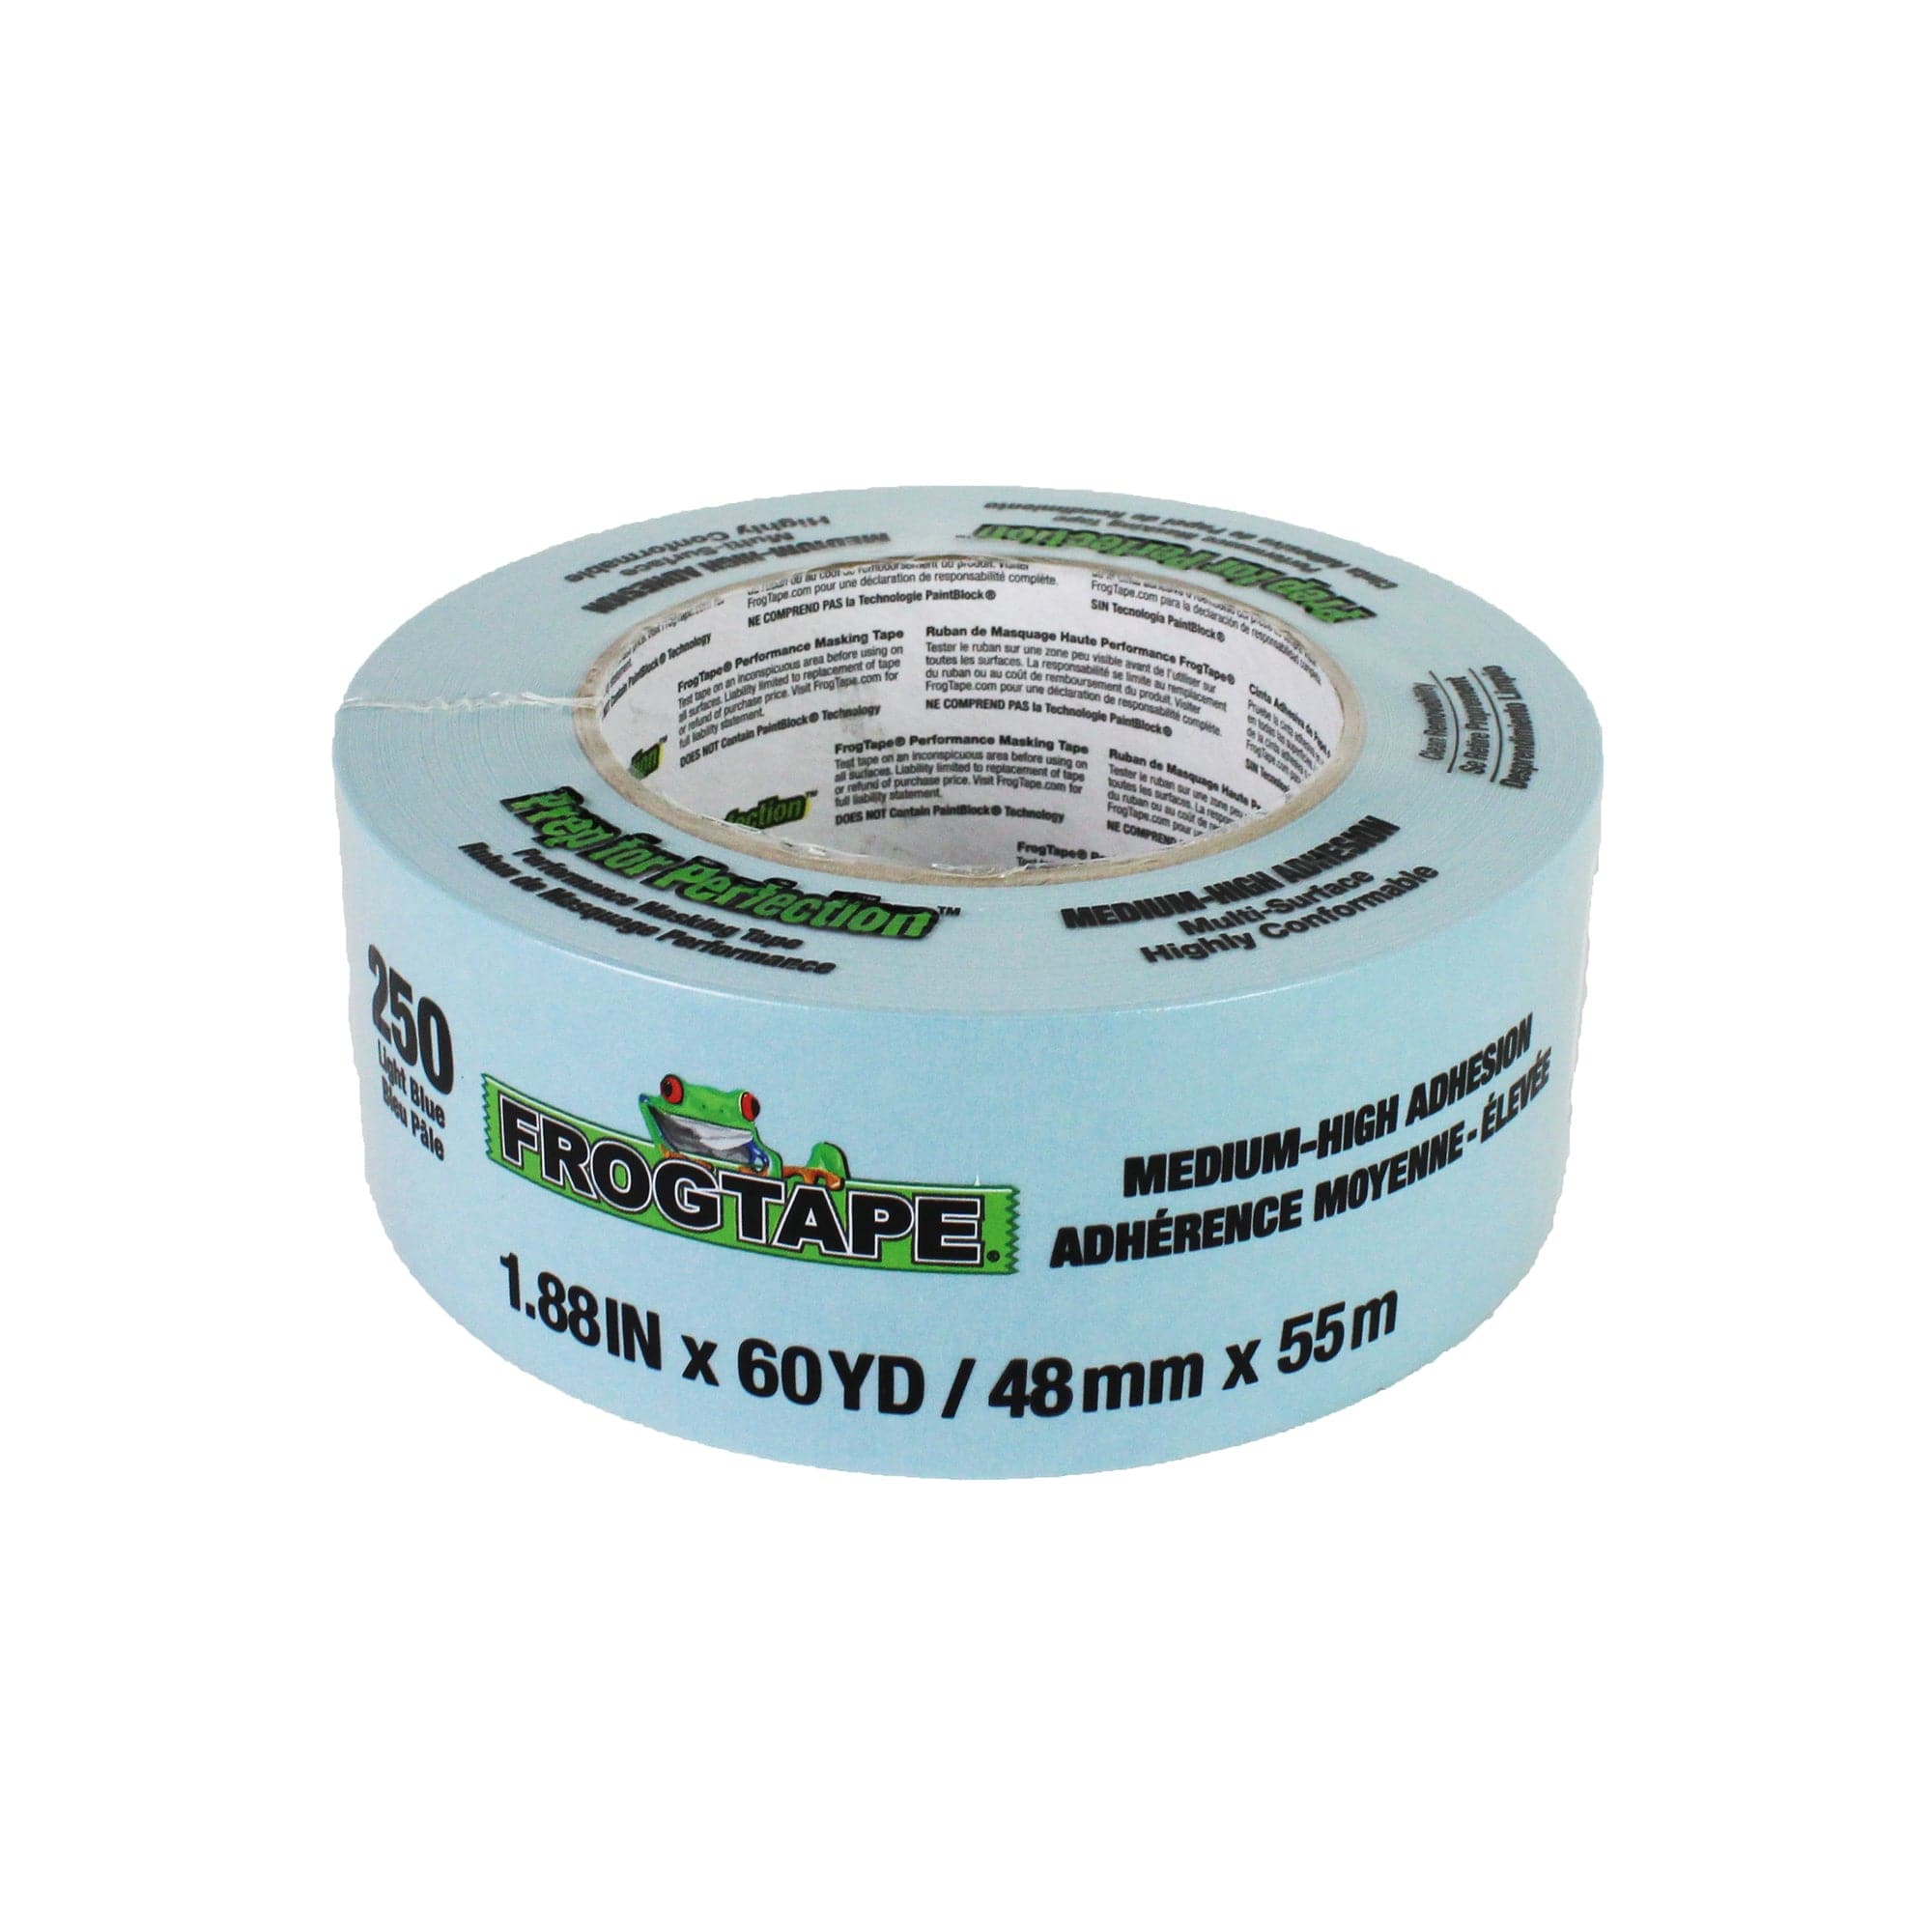 Shurtape 105380 FrogTape CP 250 48mmx55m Performance Grade Masking Tape, Medium-High Adhesion, Moderate Temperature - Light Blue